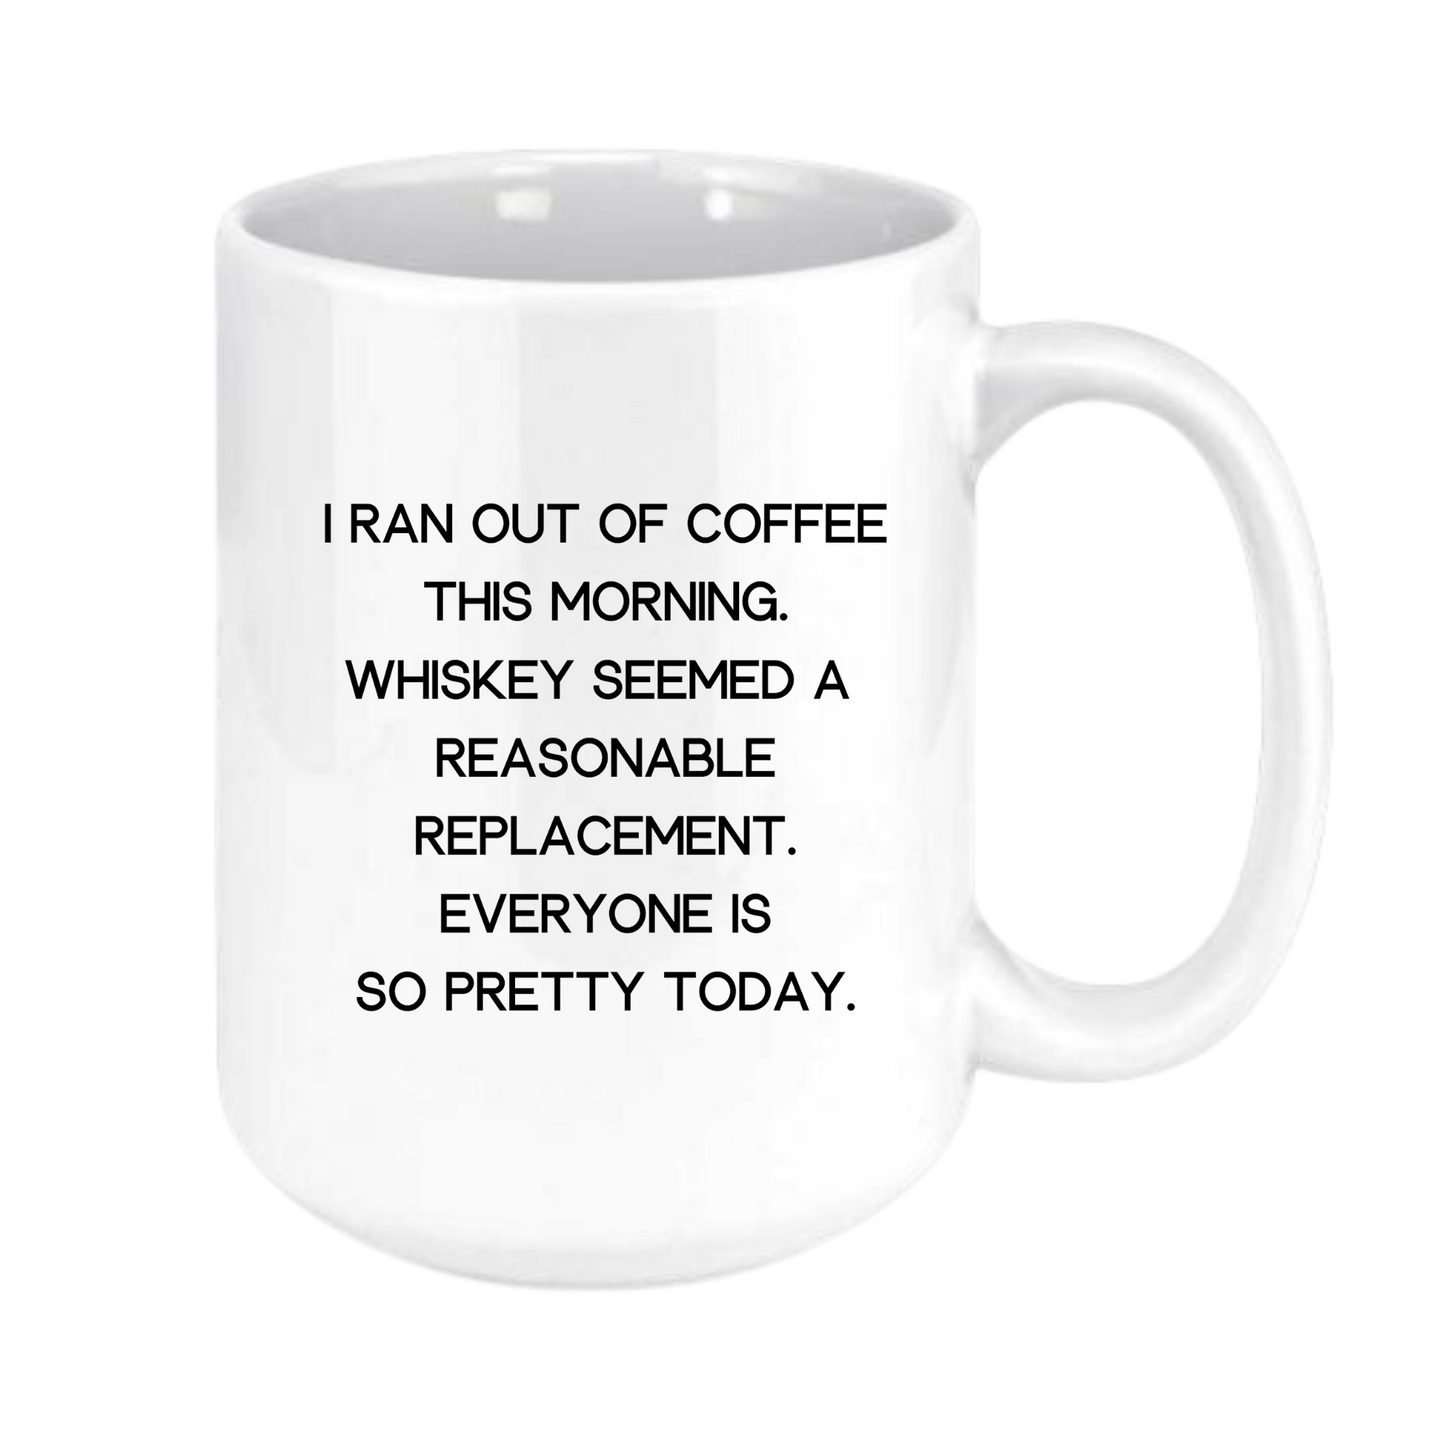 I ran out of coffee this morning... mug